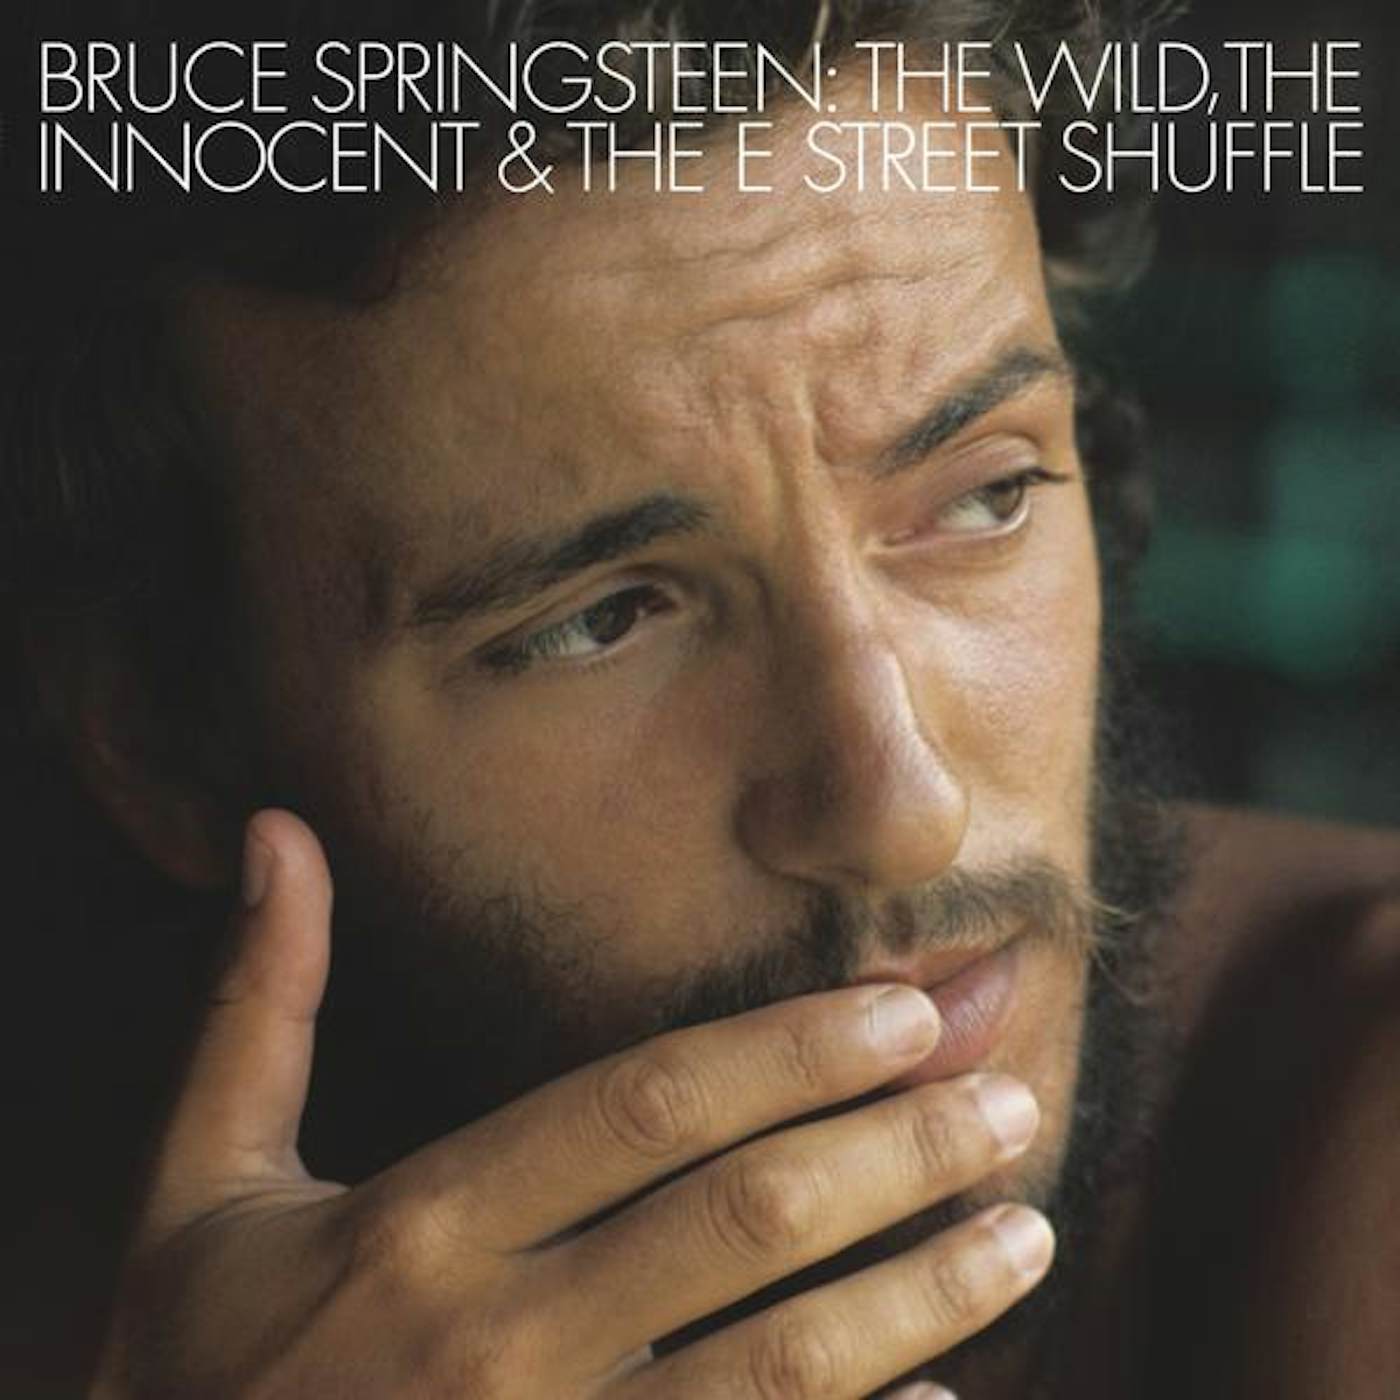 Bruce Springsteen WILD THE INNOCENT & THE E STREET SHUFFLE (180G) Vinyl Record